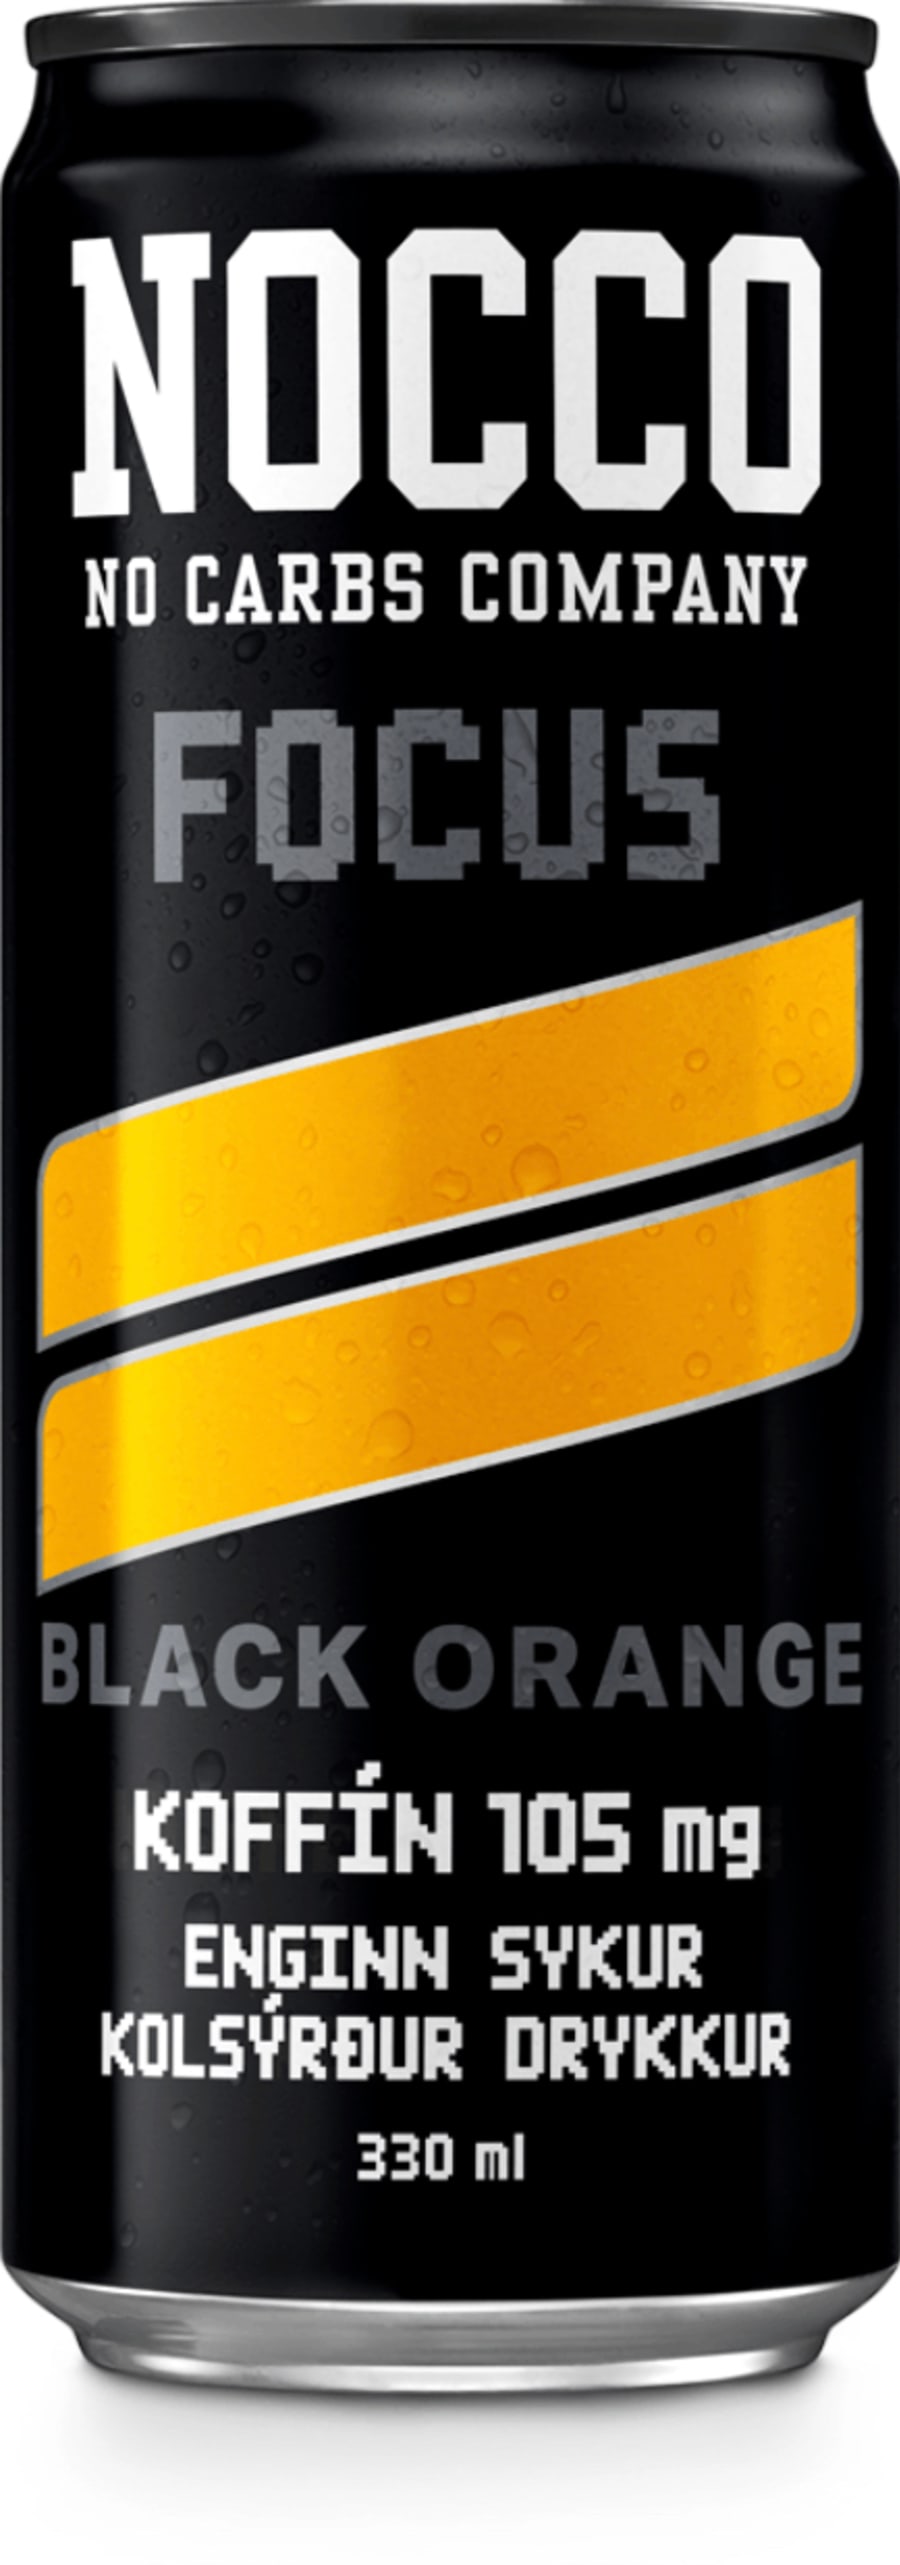 Nocco 105 mg black orange 330 ml